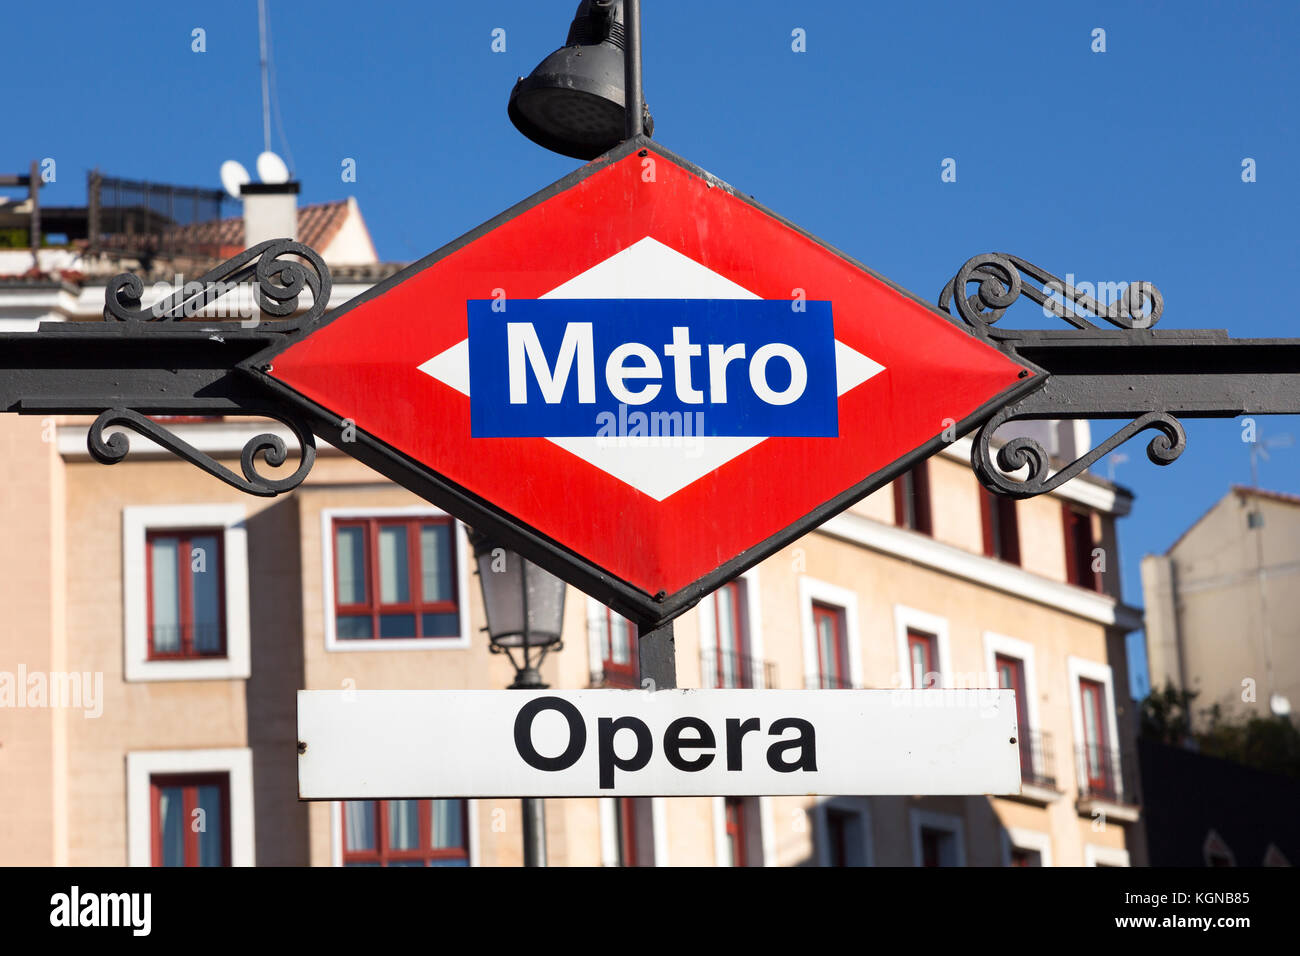 Metro station sign, Opera, Madrid city centre, Spain Stock Photo - Alamy